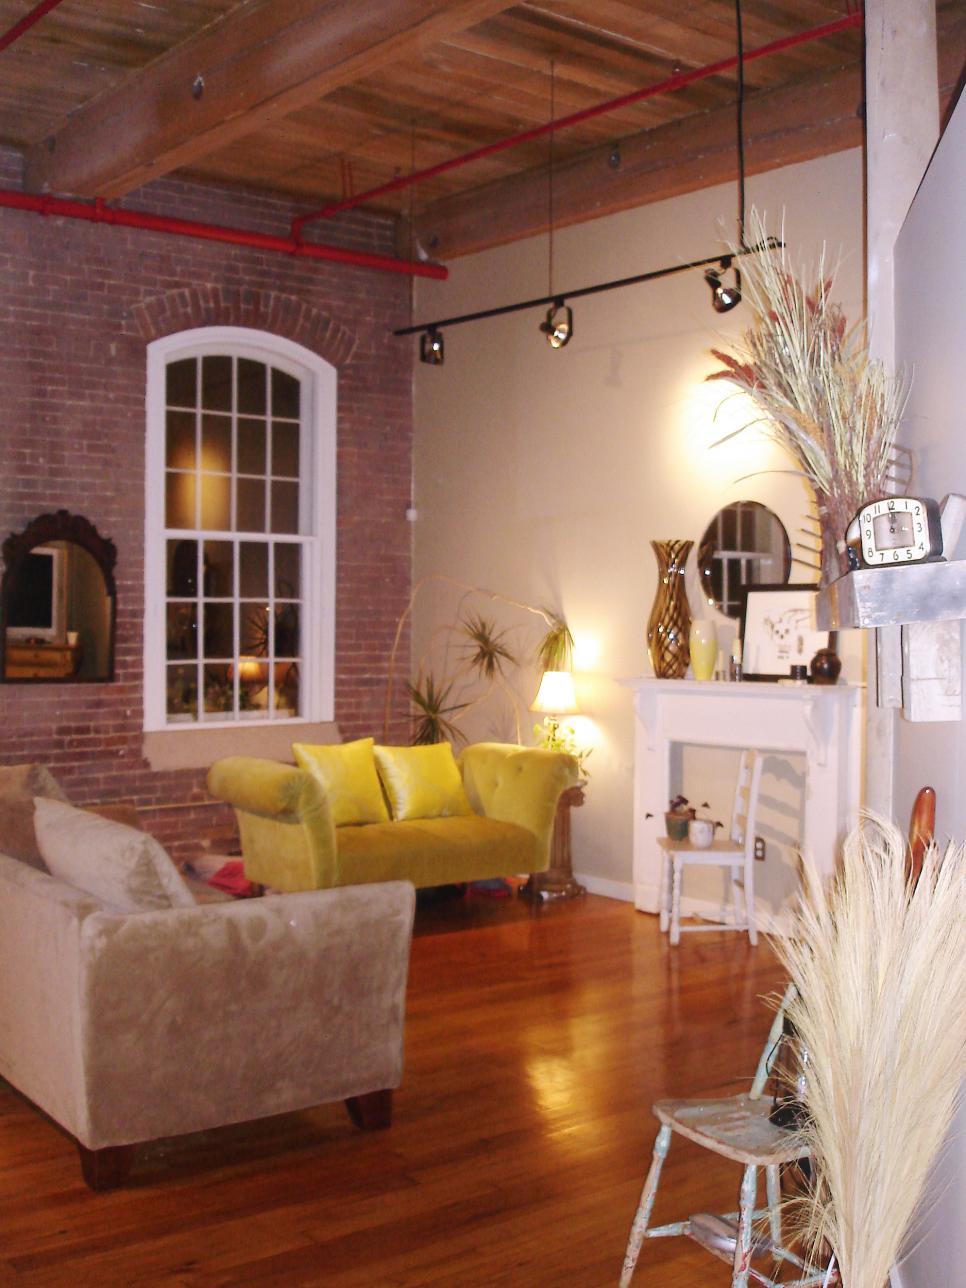 Living Room with Brick Wall | HGTV